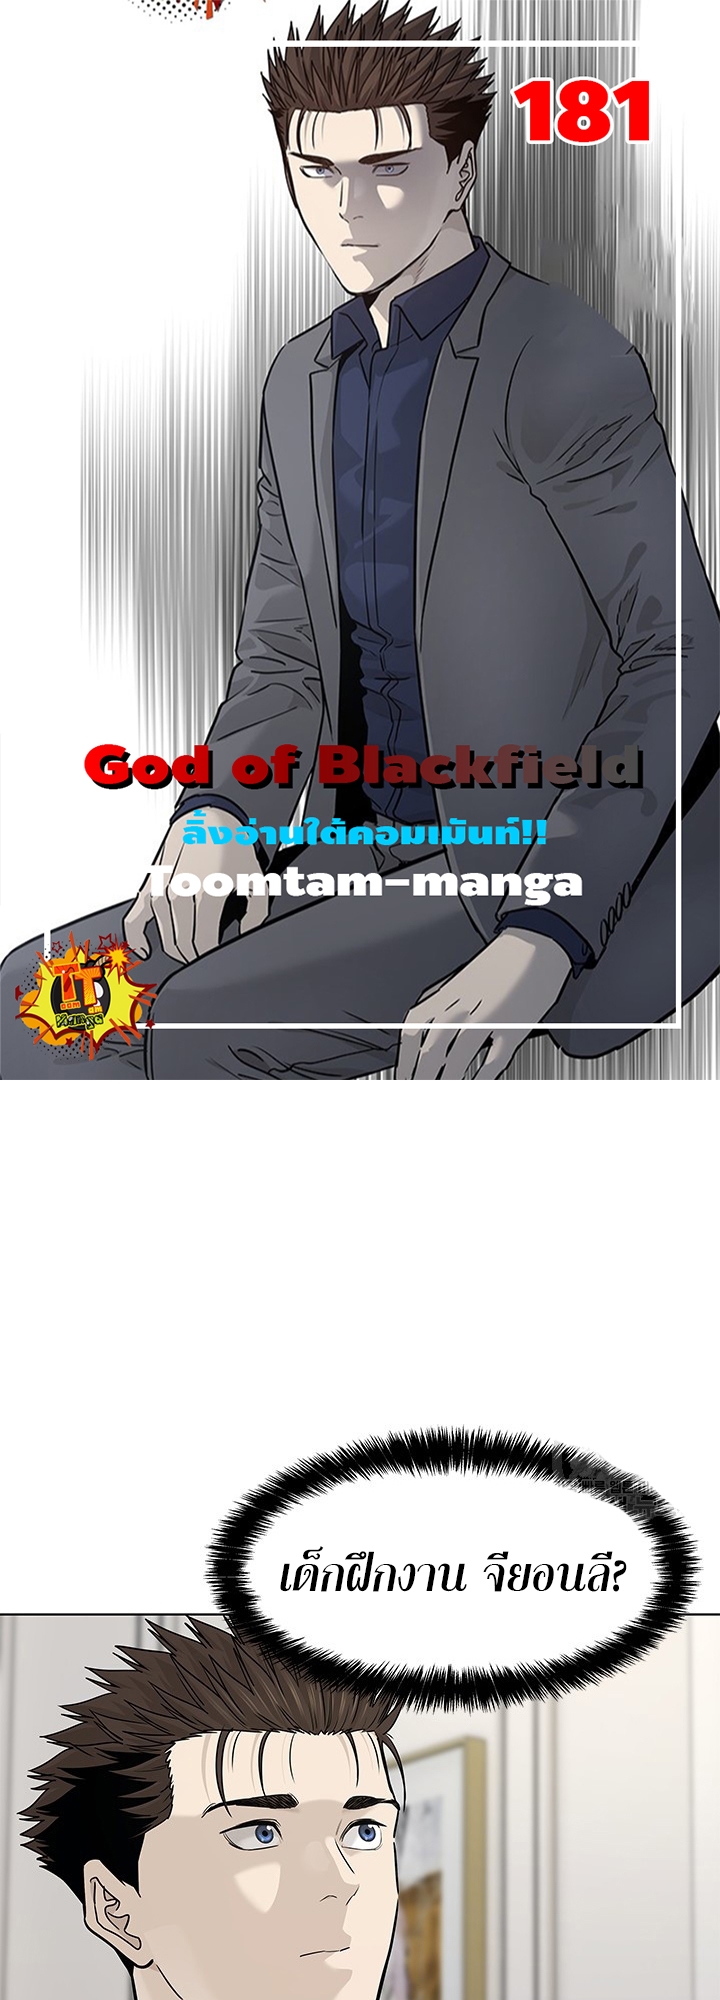 God of Blackfield 181 29 11 25660001